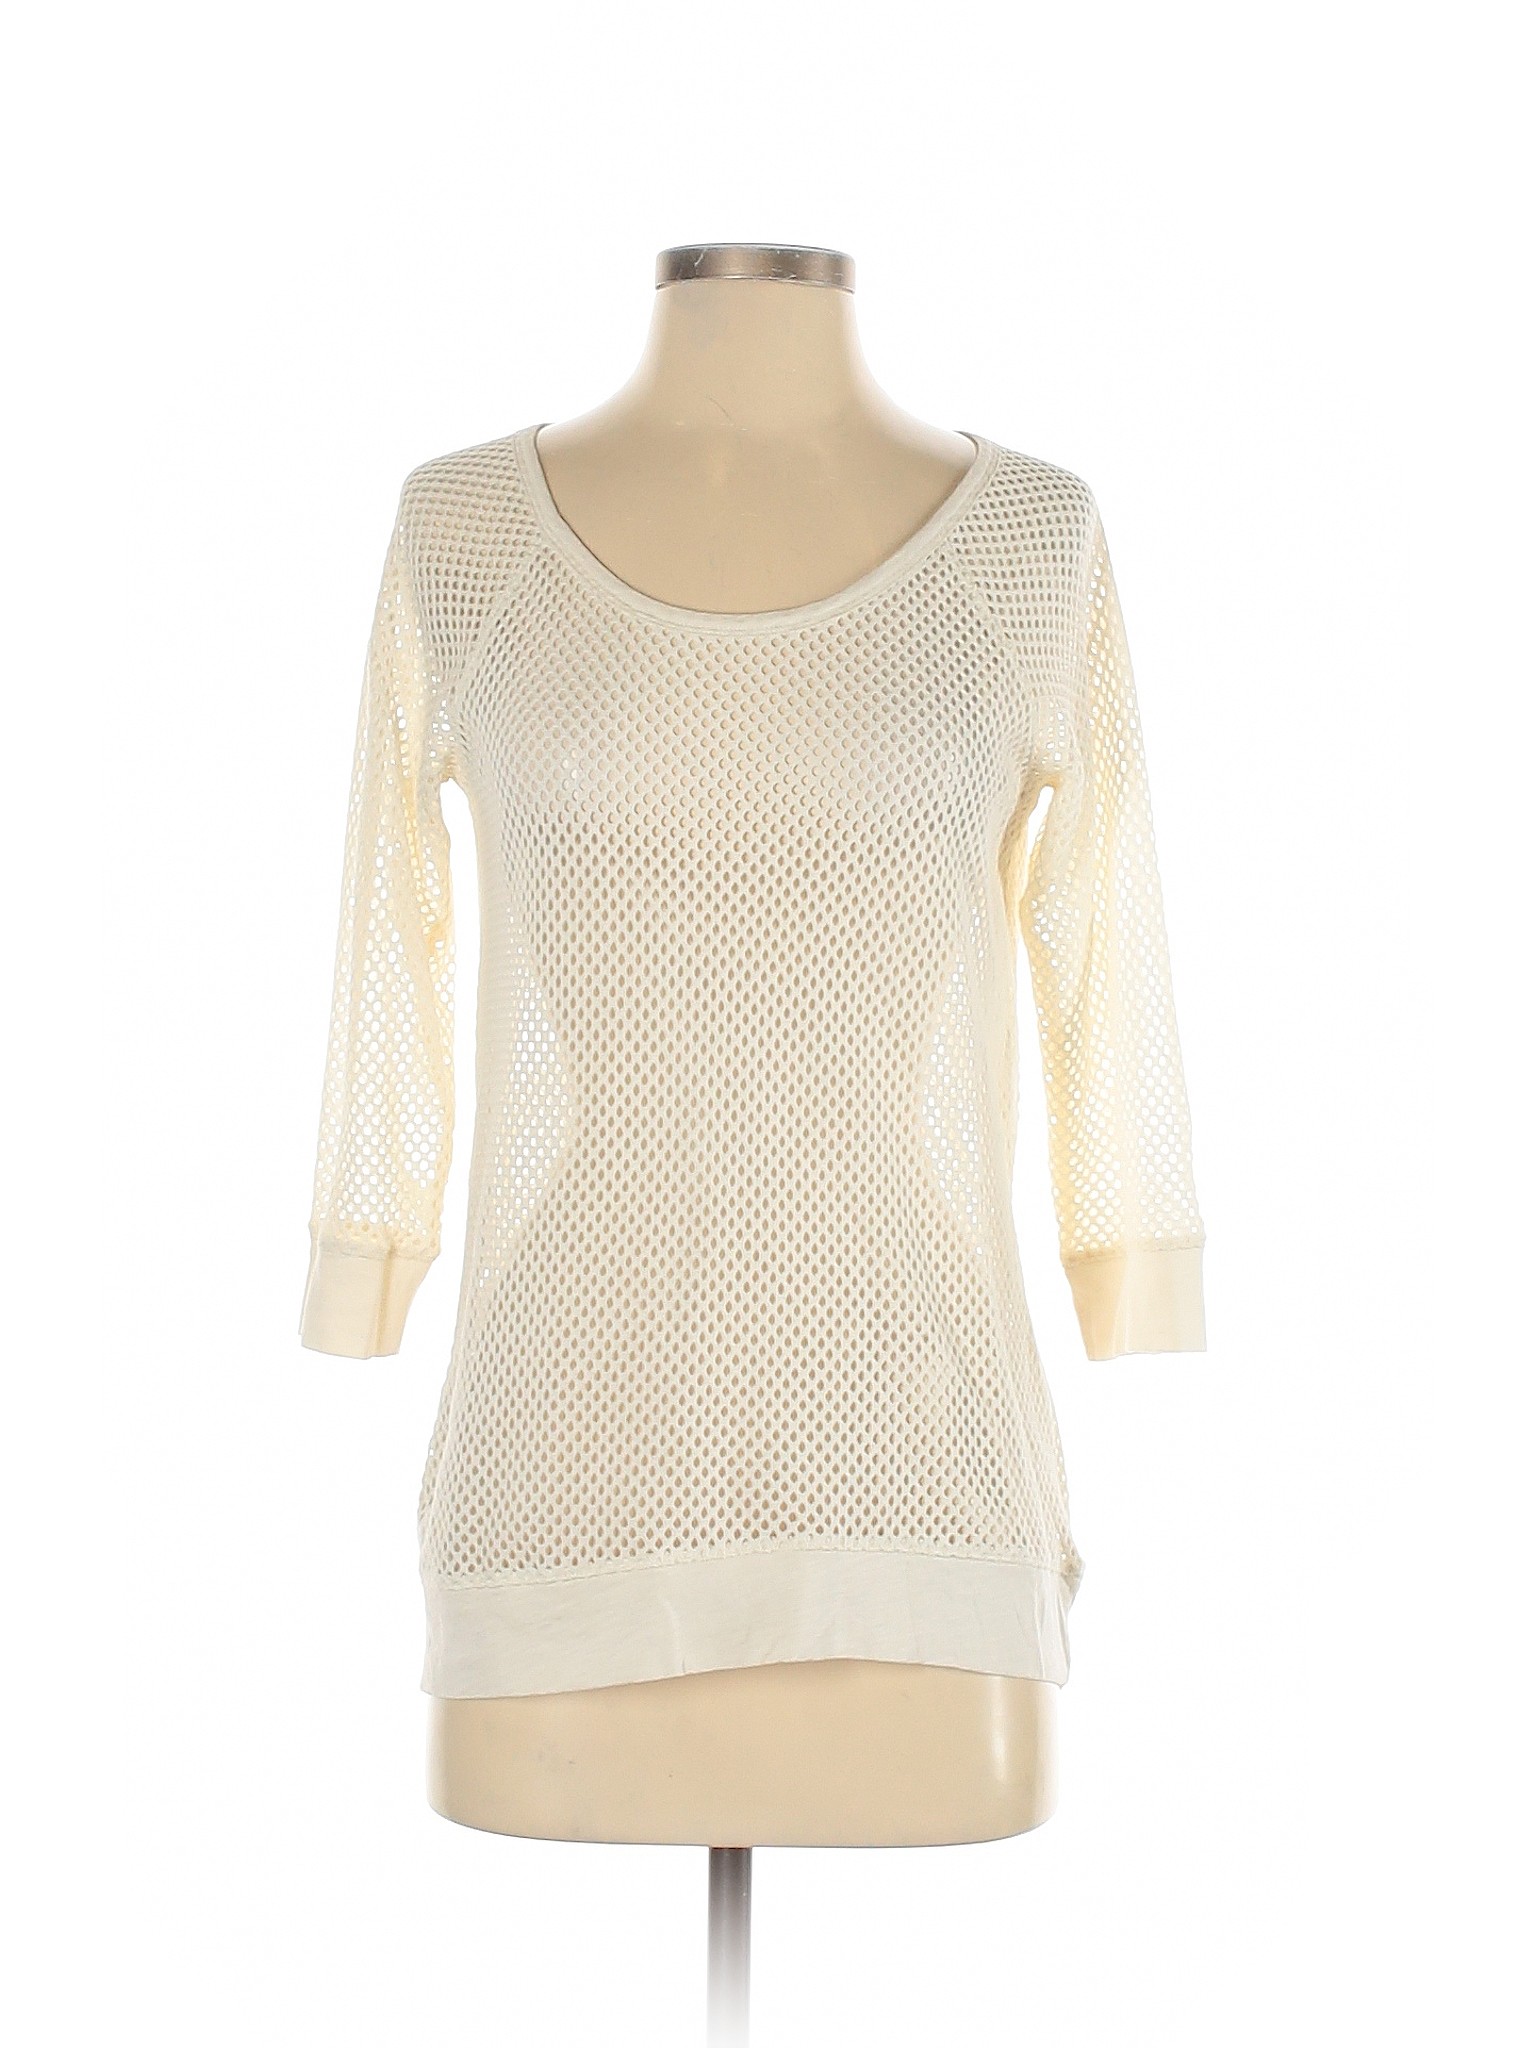 Express Women Ivory Pullover Sweater S | eBay